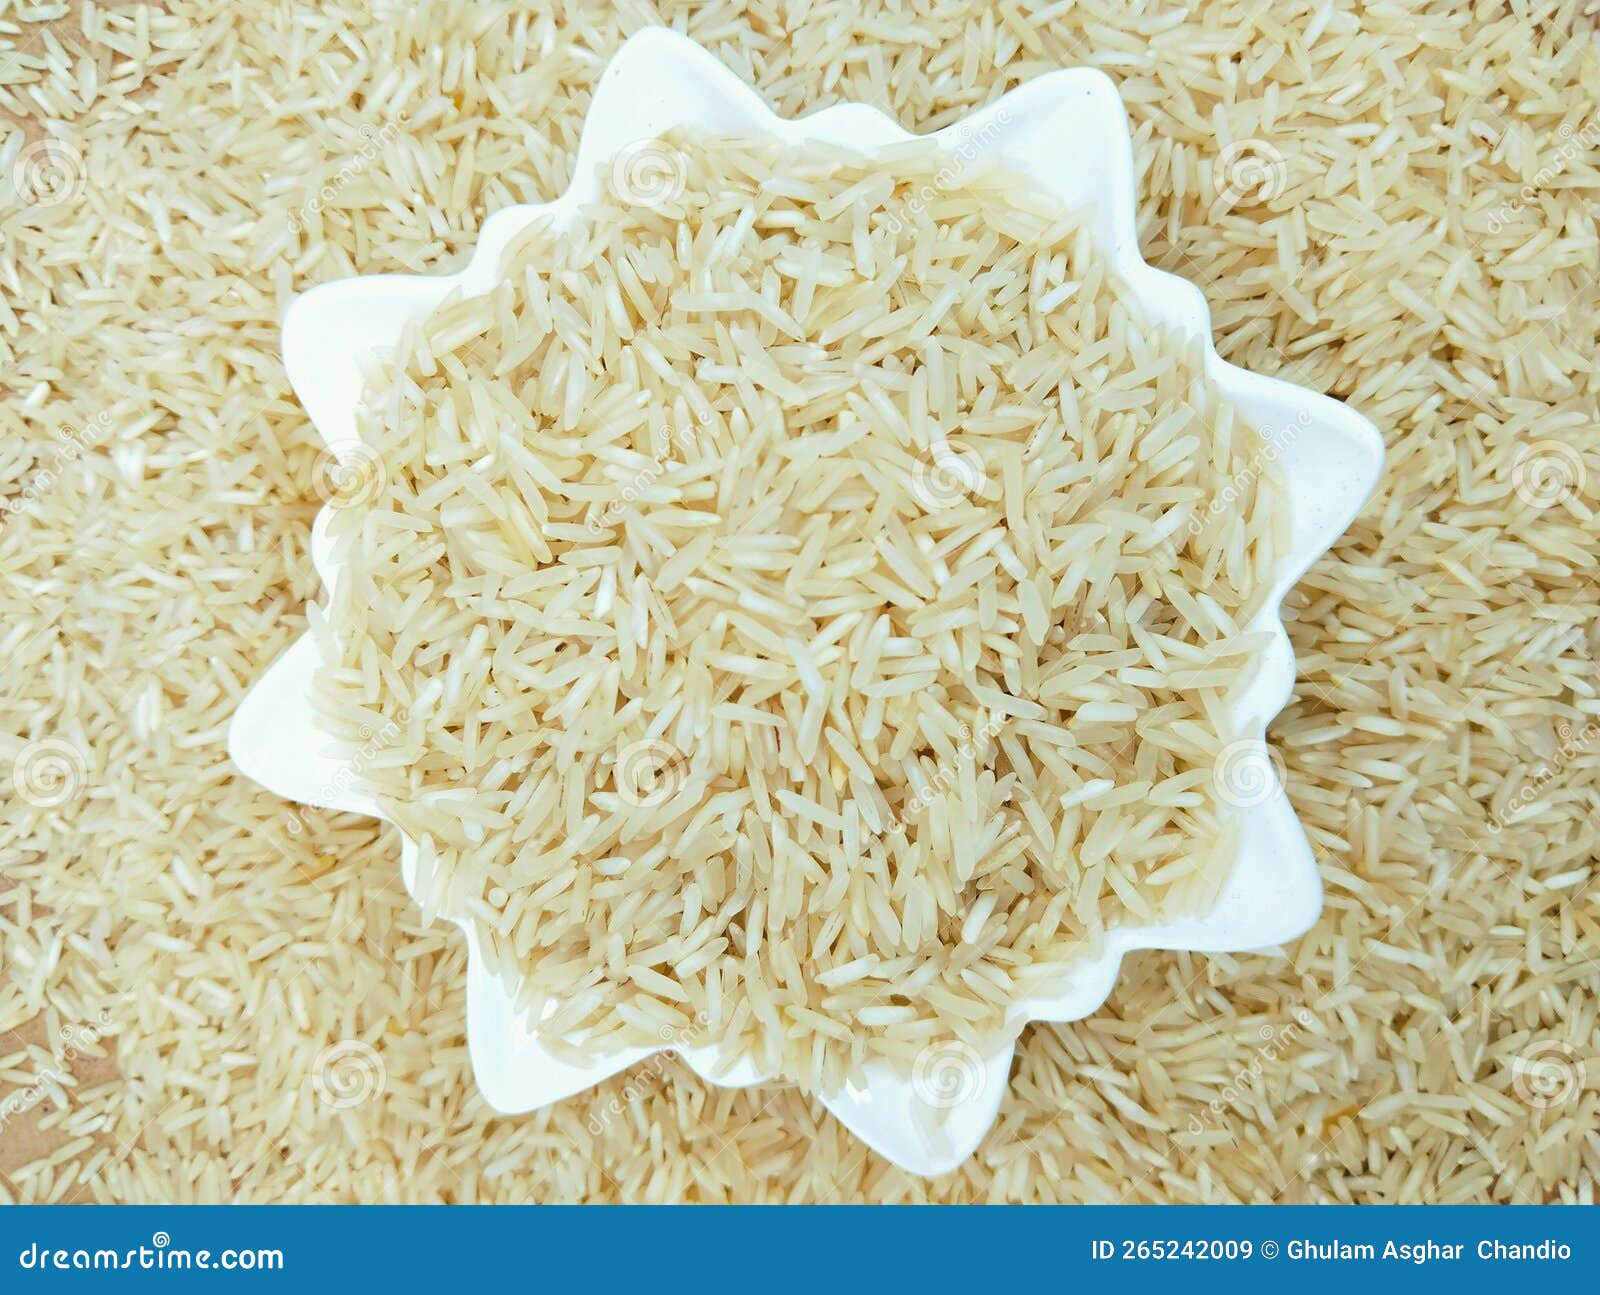 polished rice white-rice cereal grains raw wholerice hulled milled-rice staple food kacha chawal riz poli arroz polido photo